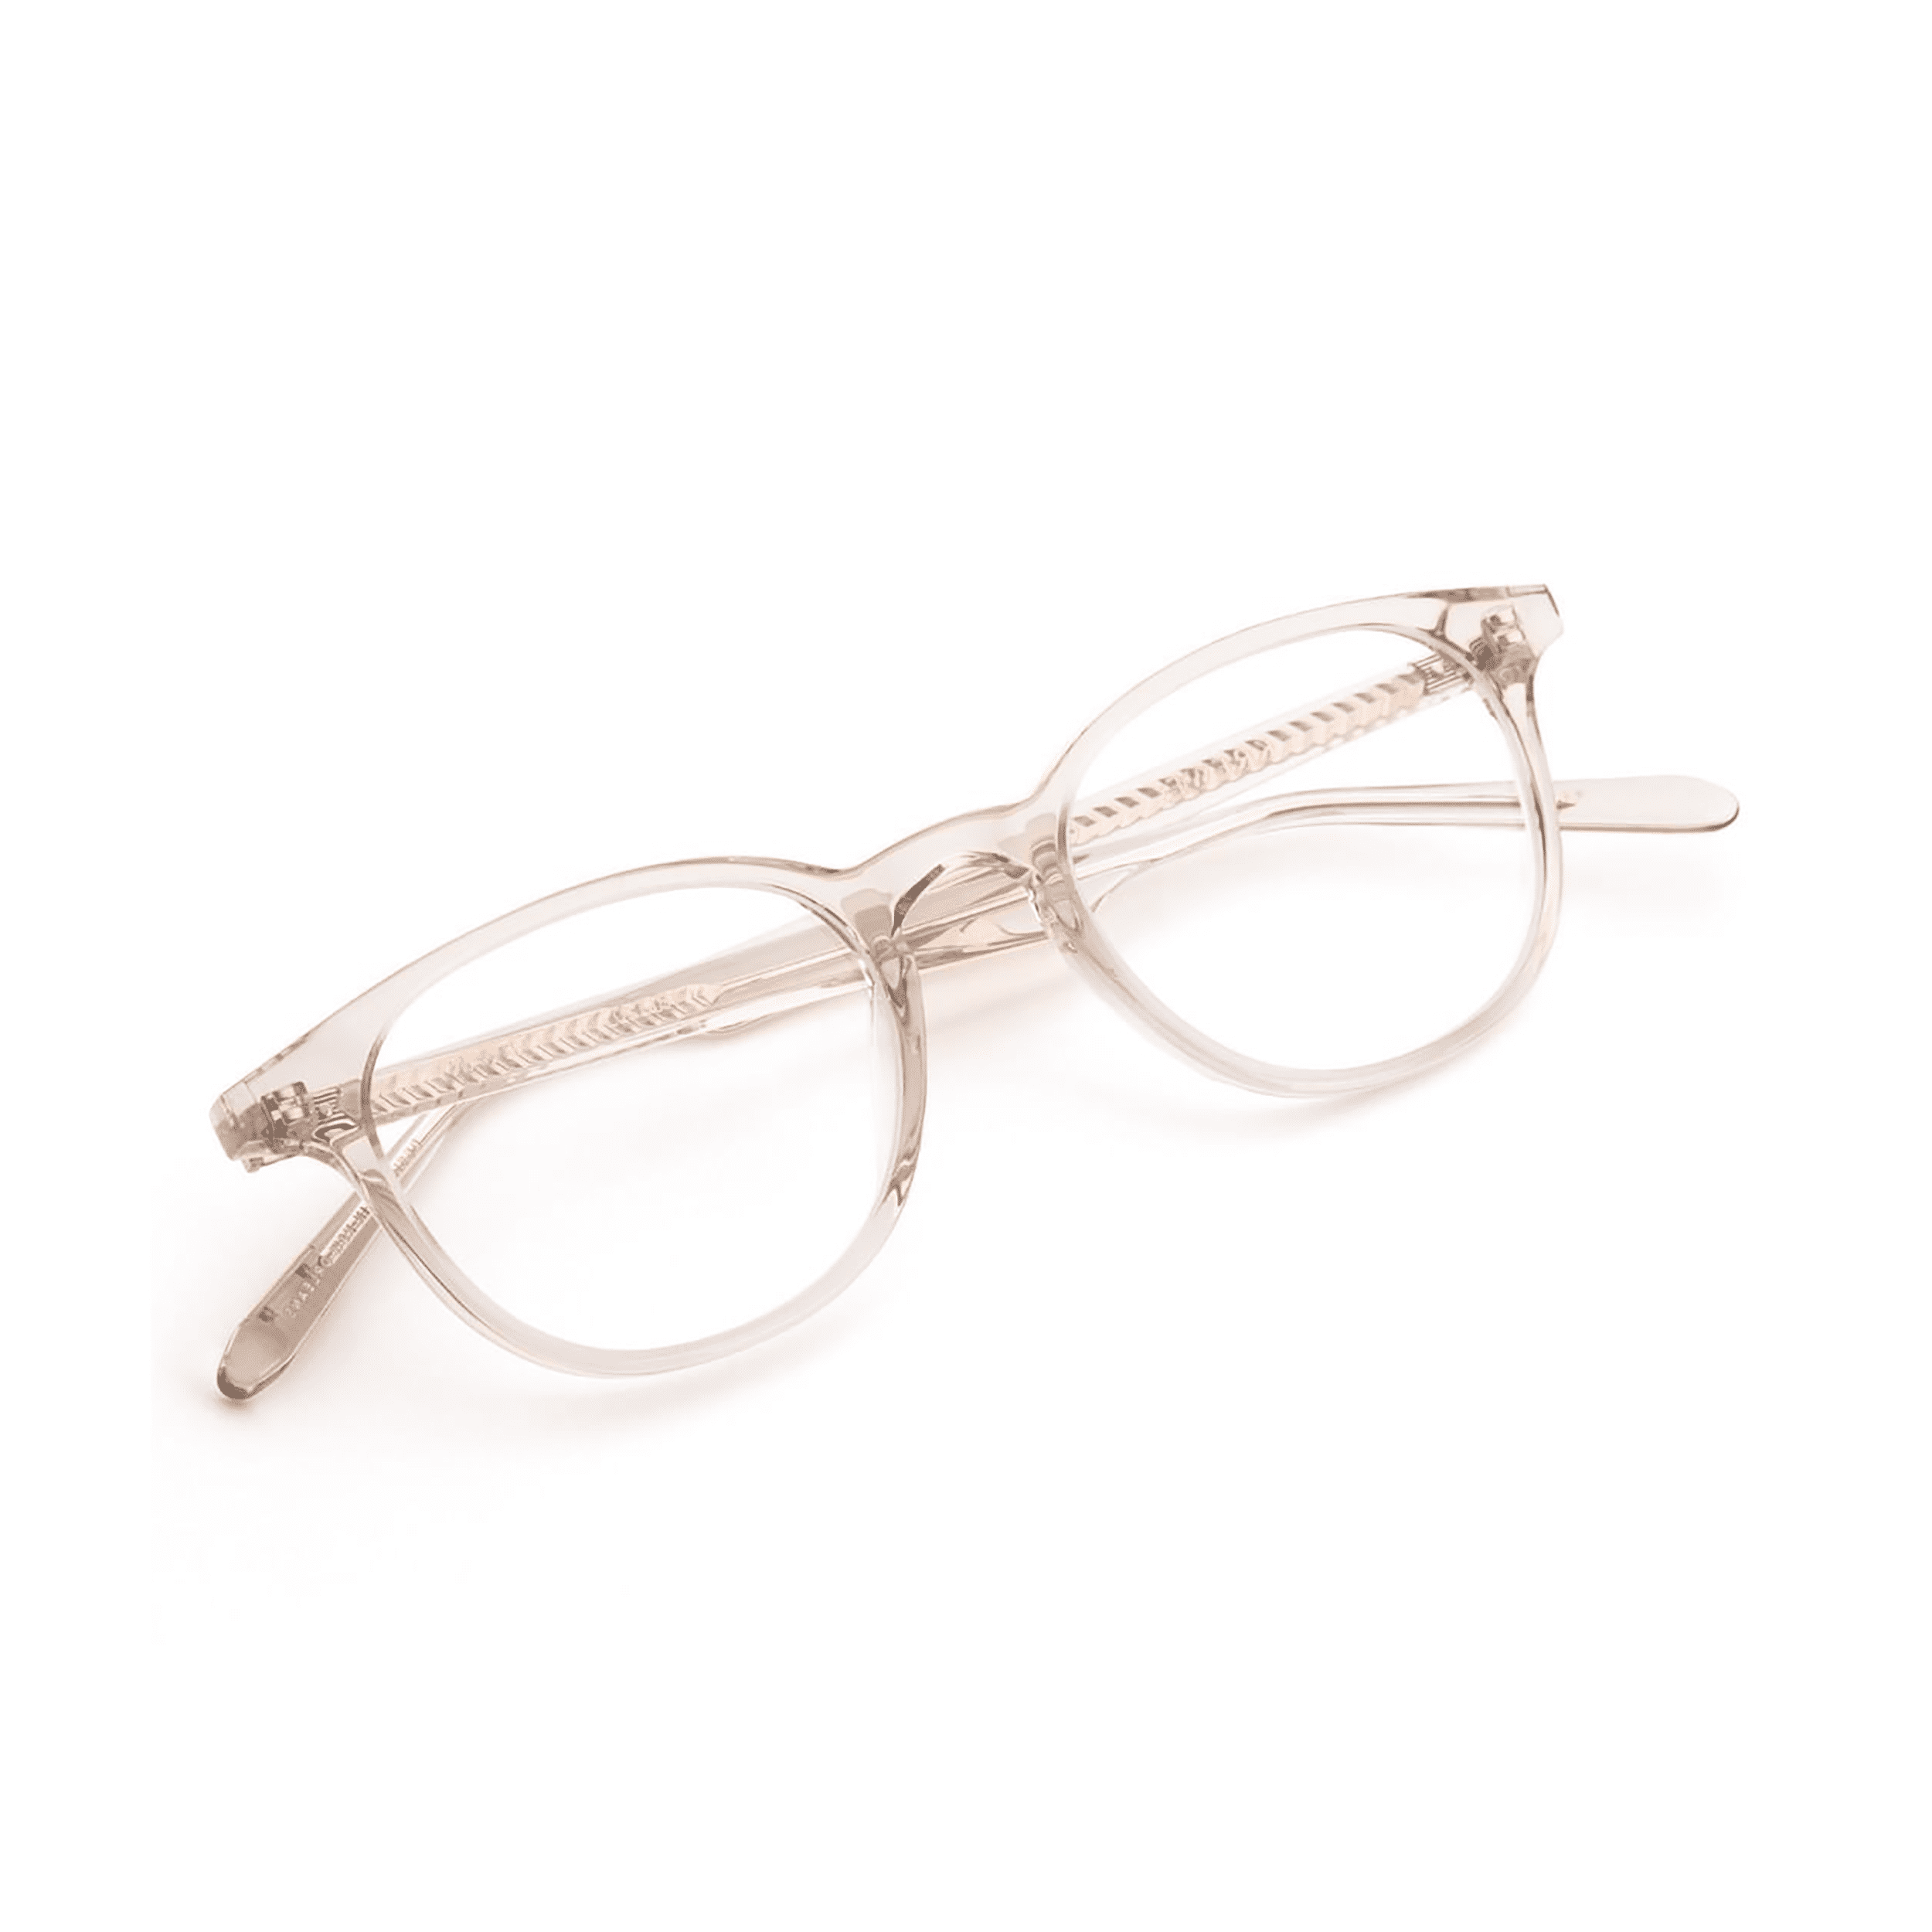 Clear glasses frames